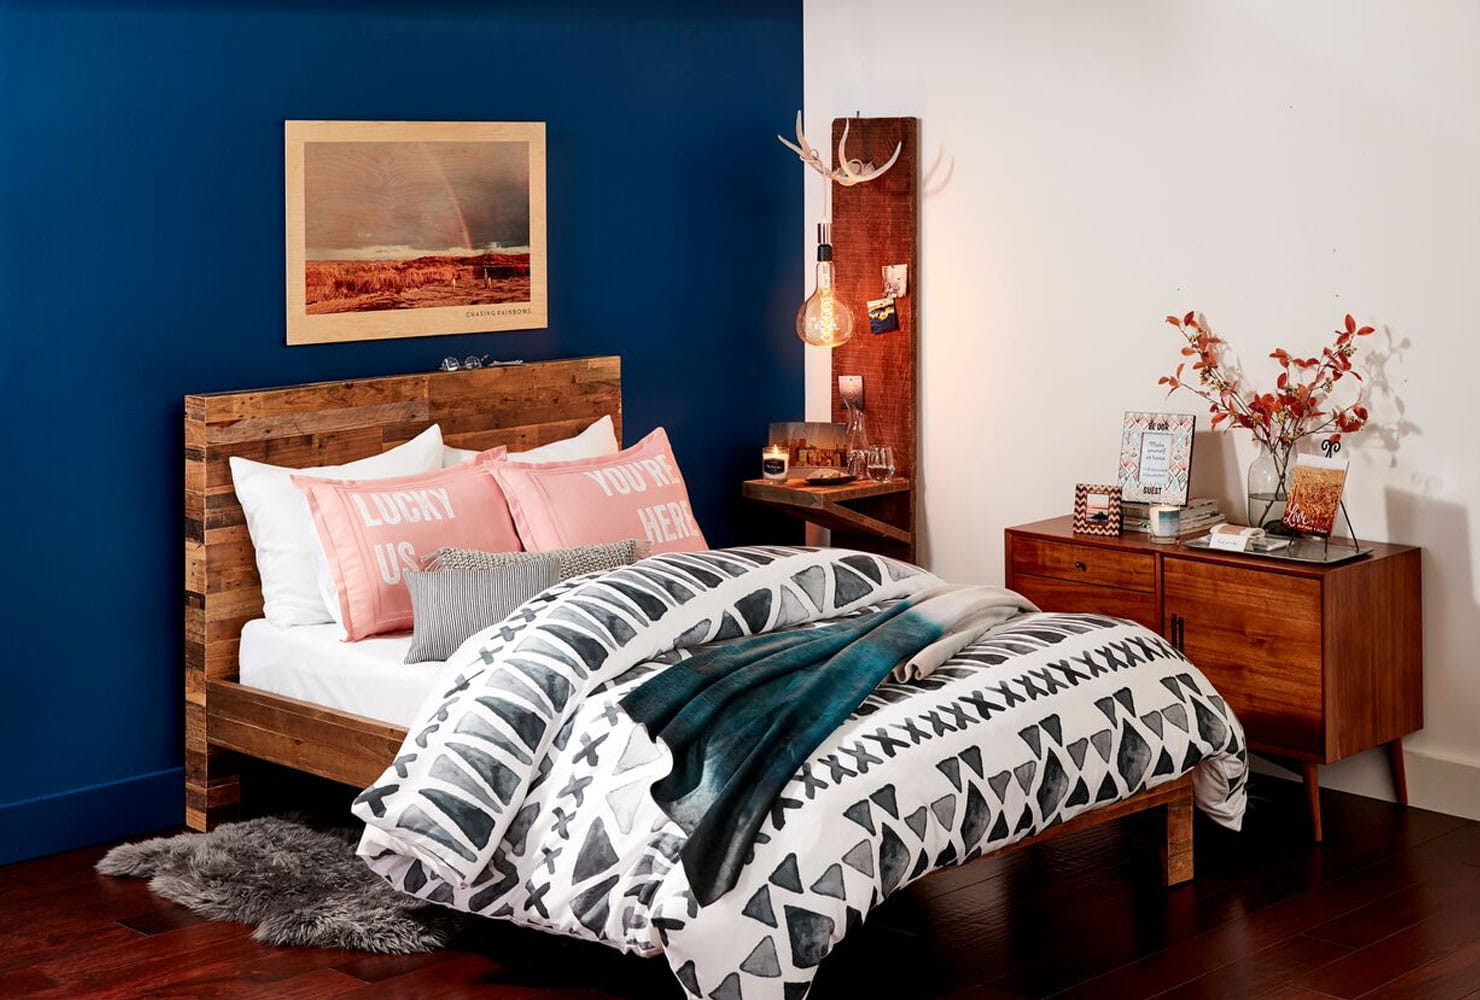 DIY Wall Decor Ideas For Bedroom
 24 DIY Bedroom Decor Ideas To Inspire You With Printables